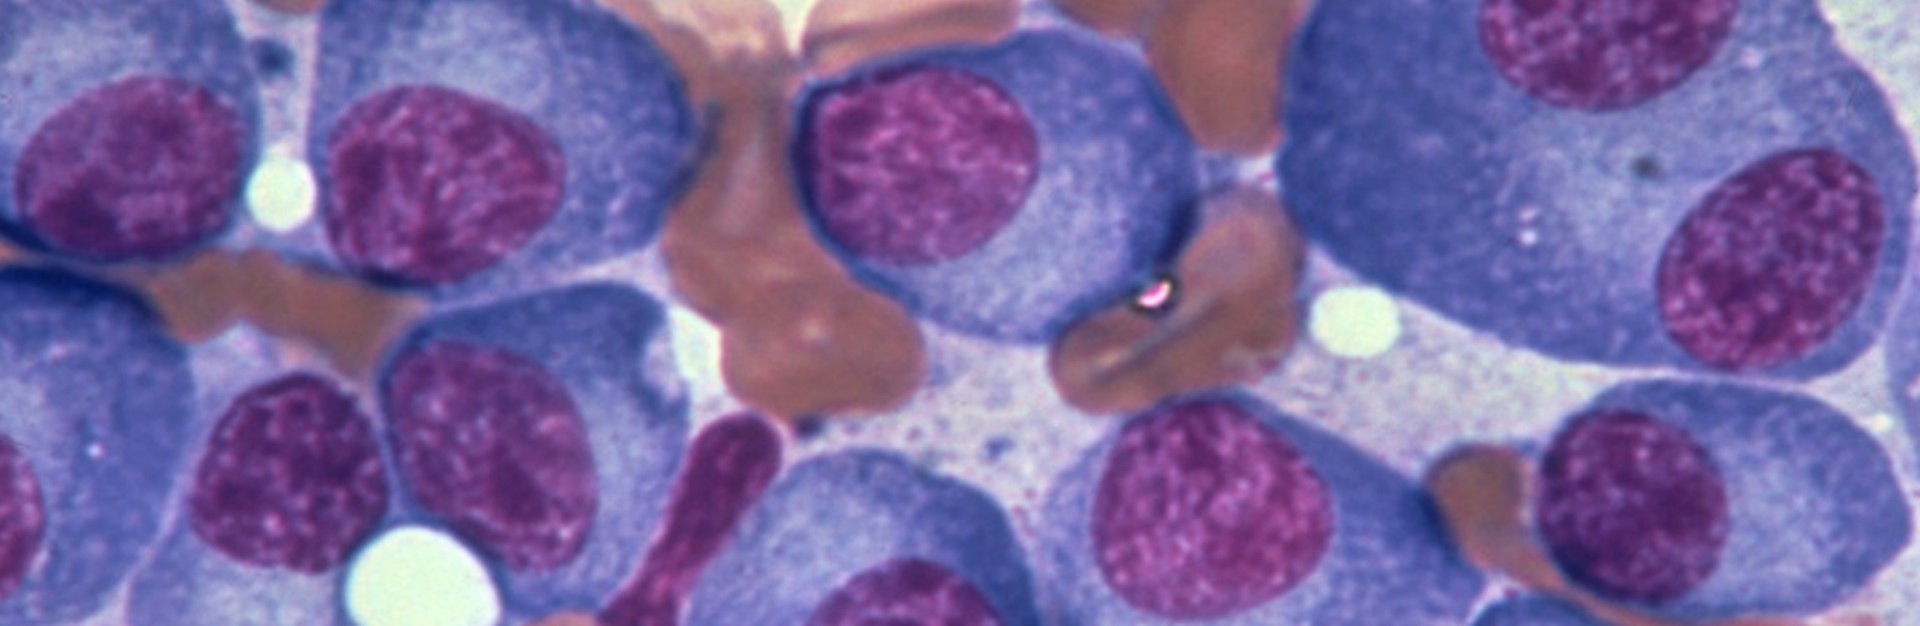 La terapia celular prolonga la supervivencia en mieloma resistente...